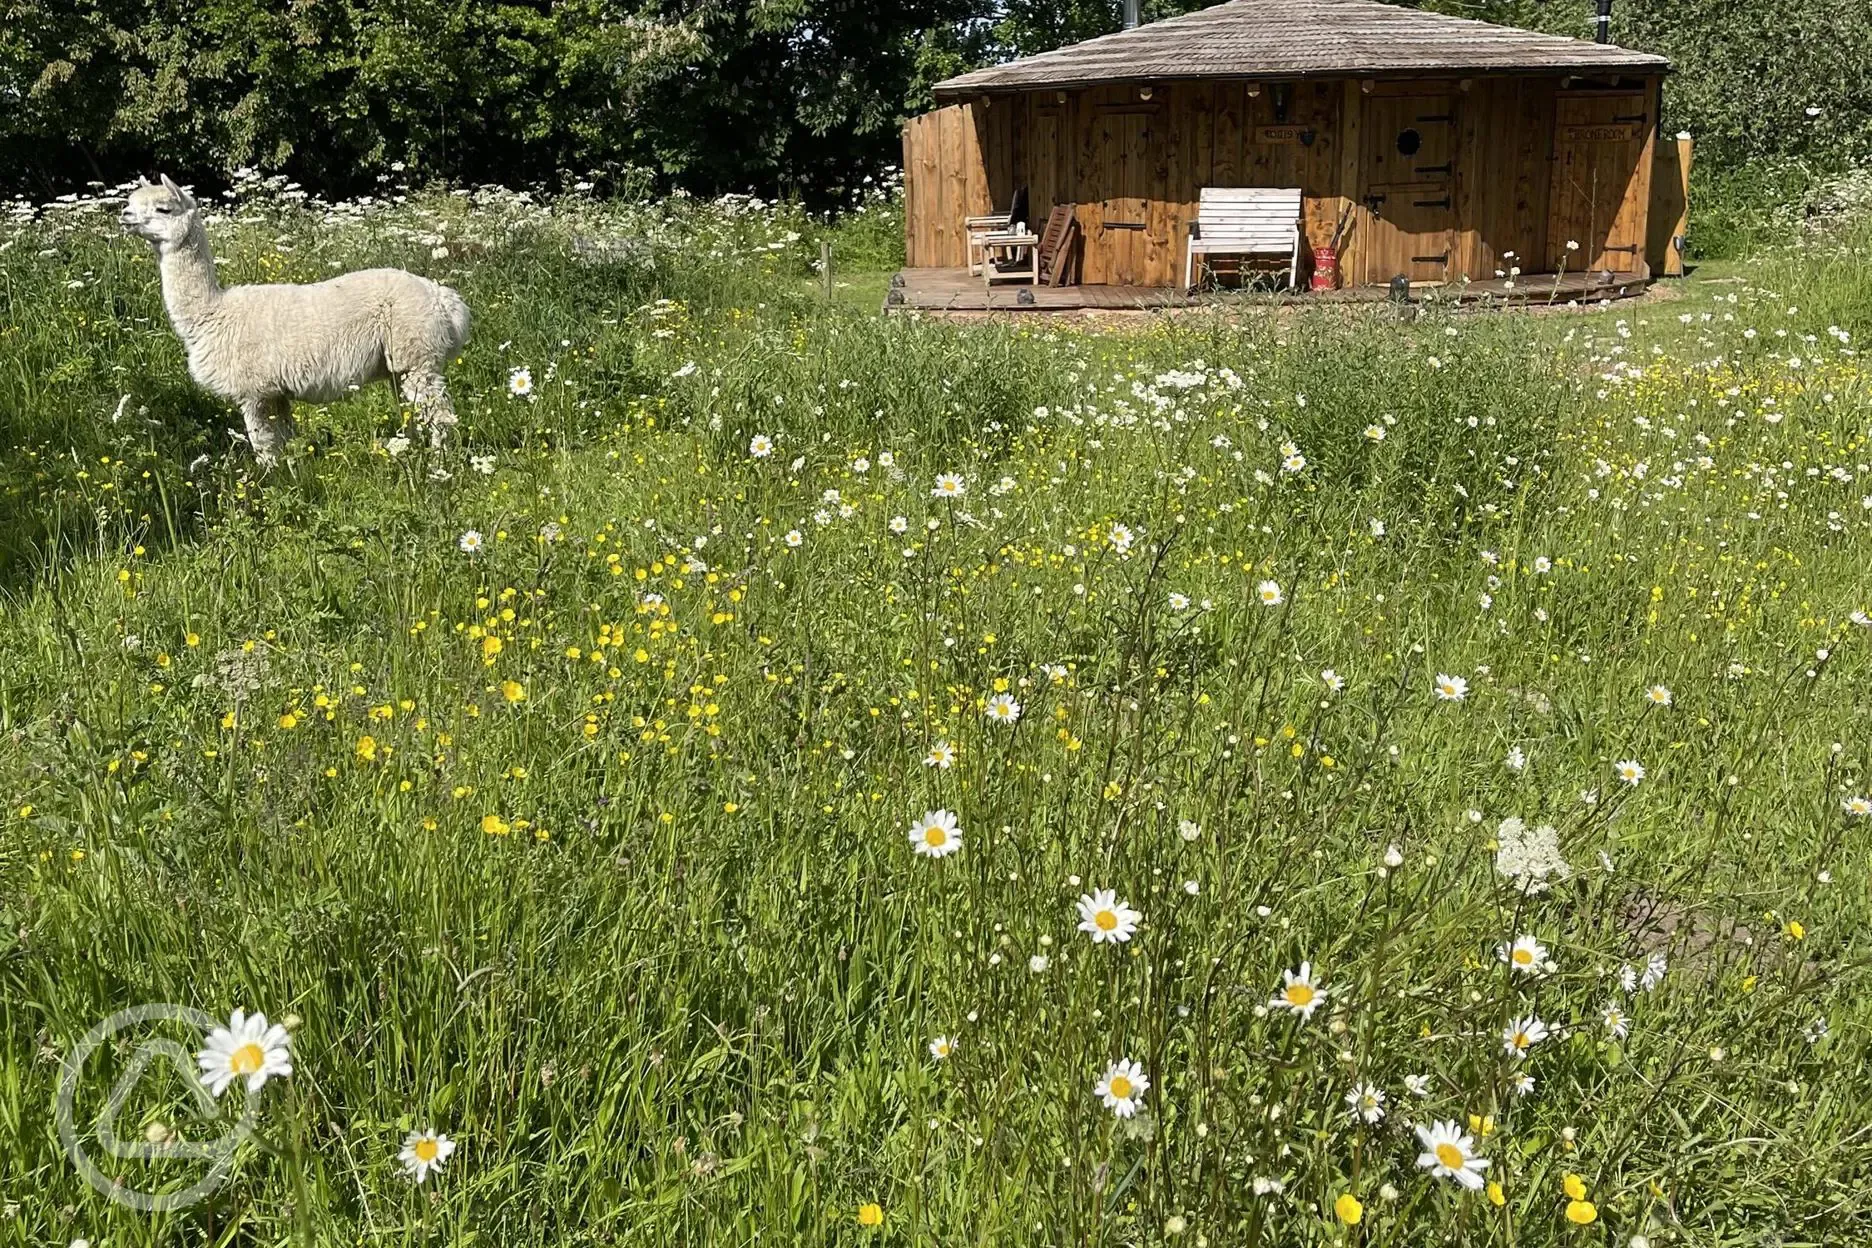 Daisy roundhouse with Cuscoe alpaca